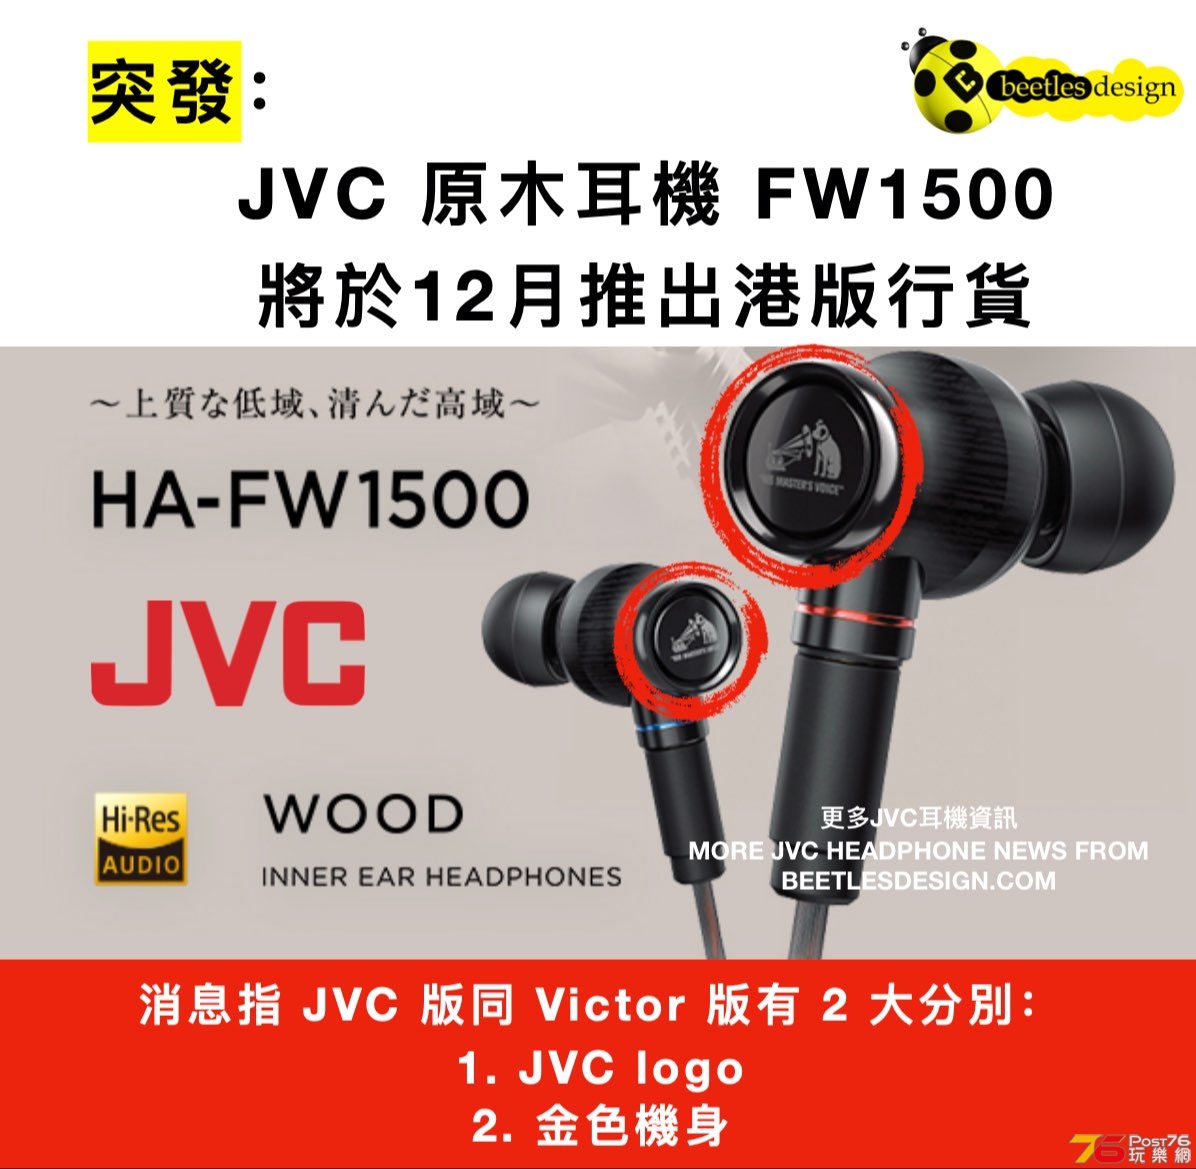 JVC-HA-FW1500-news-sticker.jpg